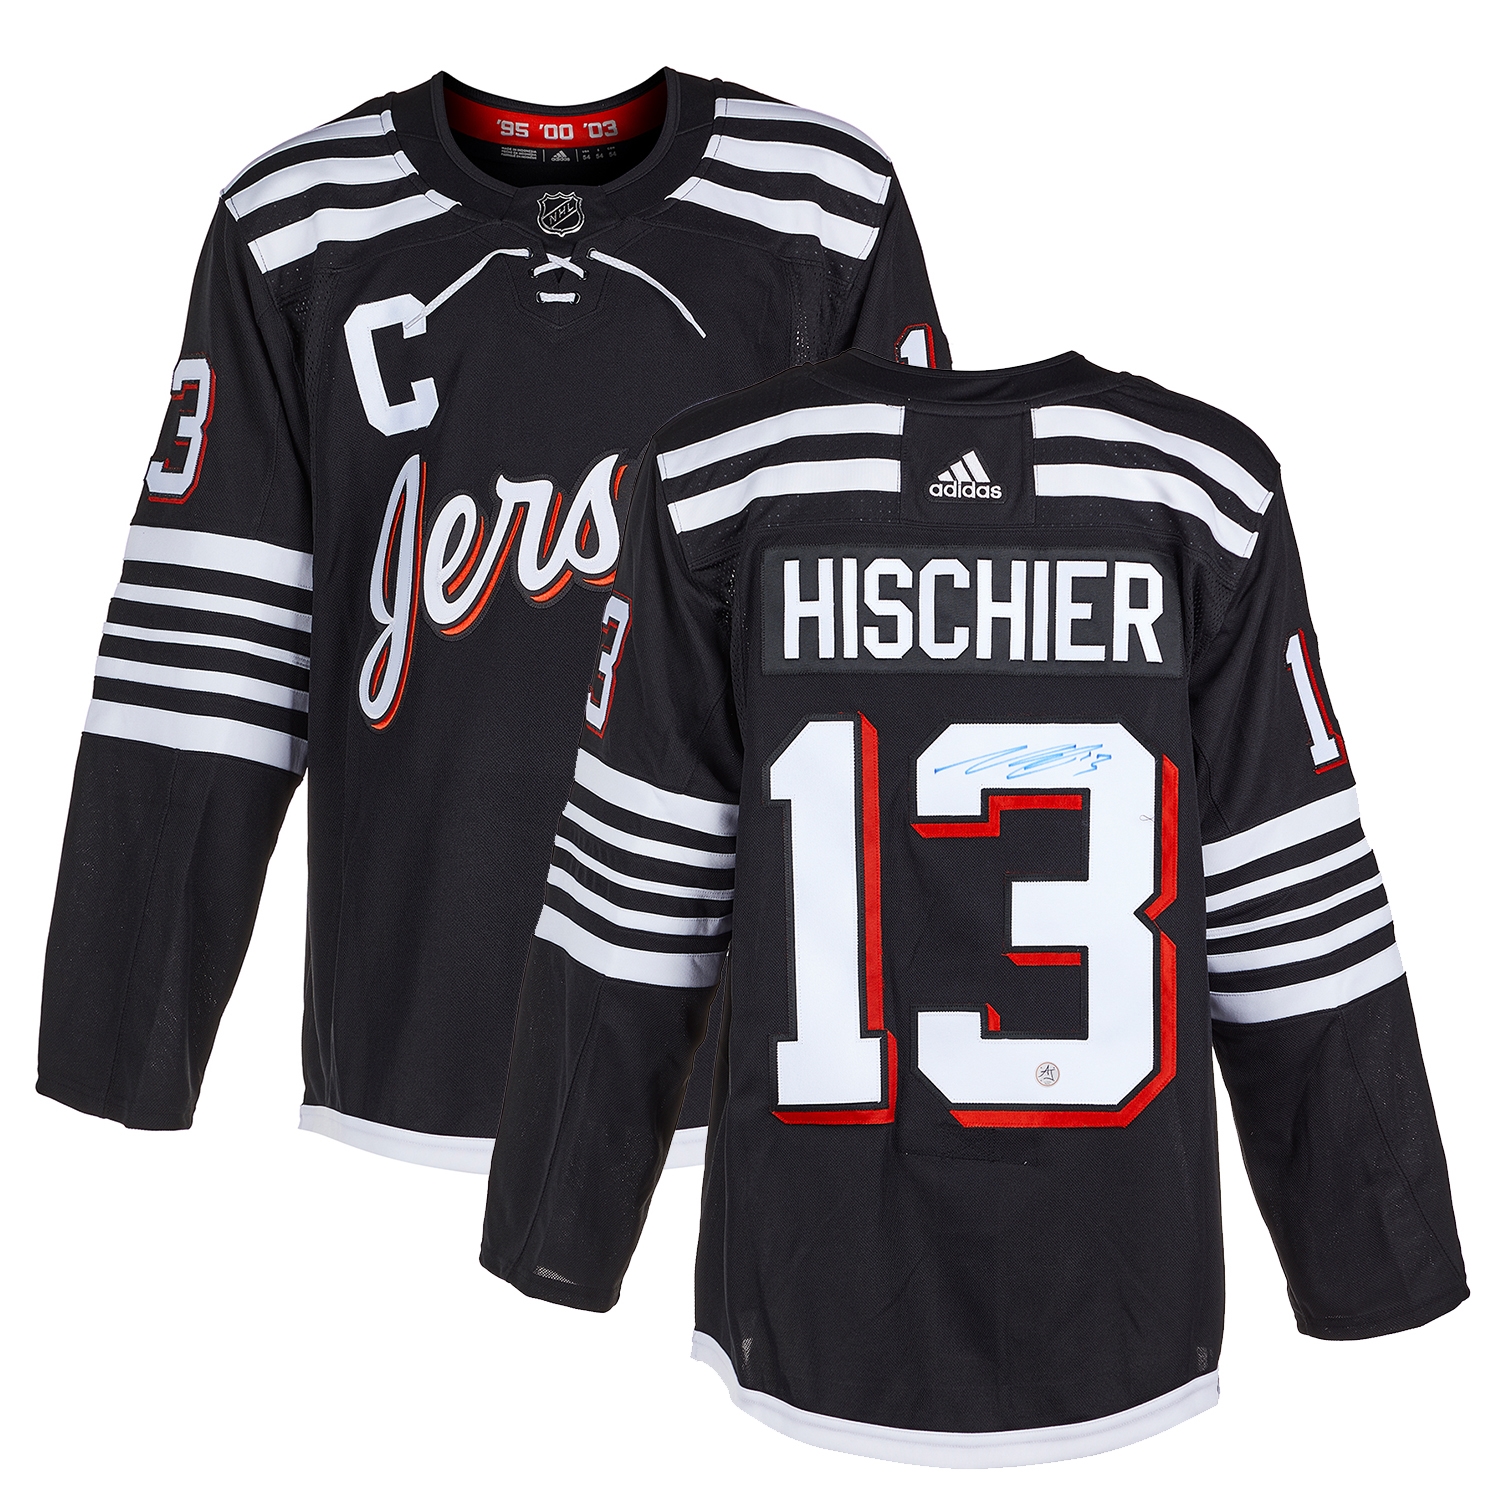 Nico Hischier Signed New Jersey Devils Alt Black adidas Jersey